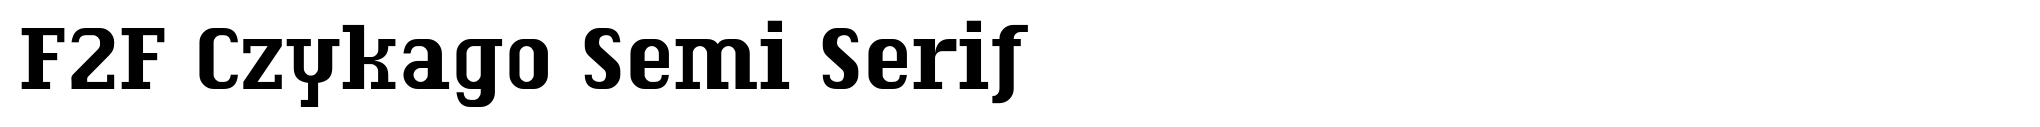 F2F Czykago Semi Serif image